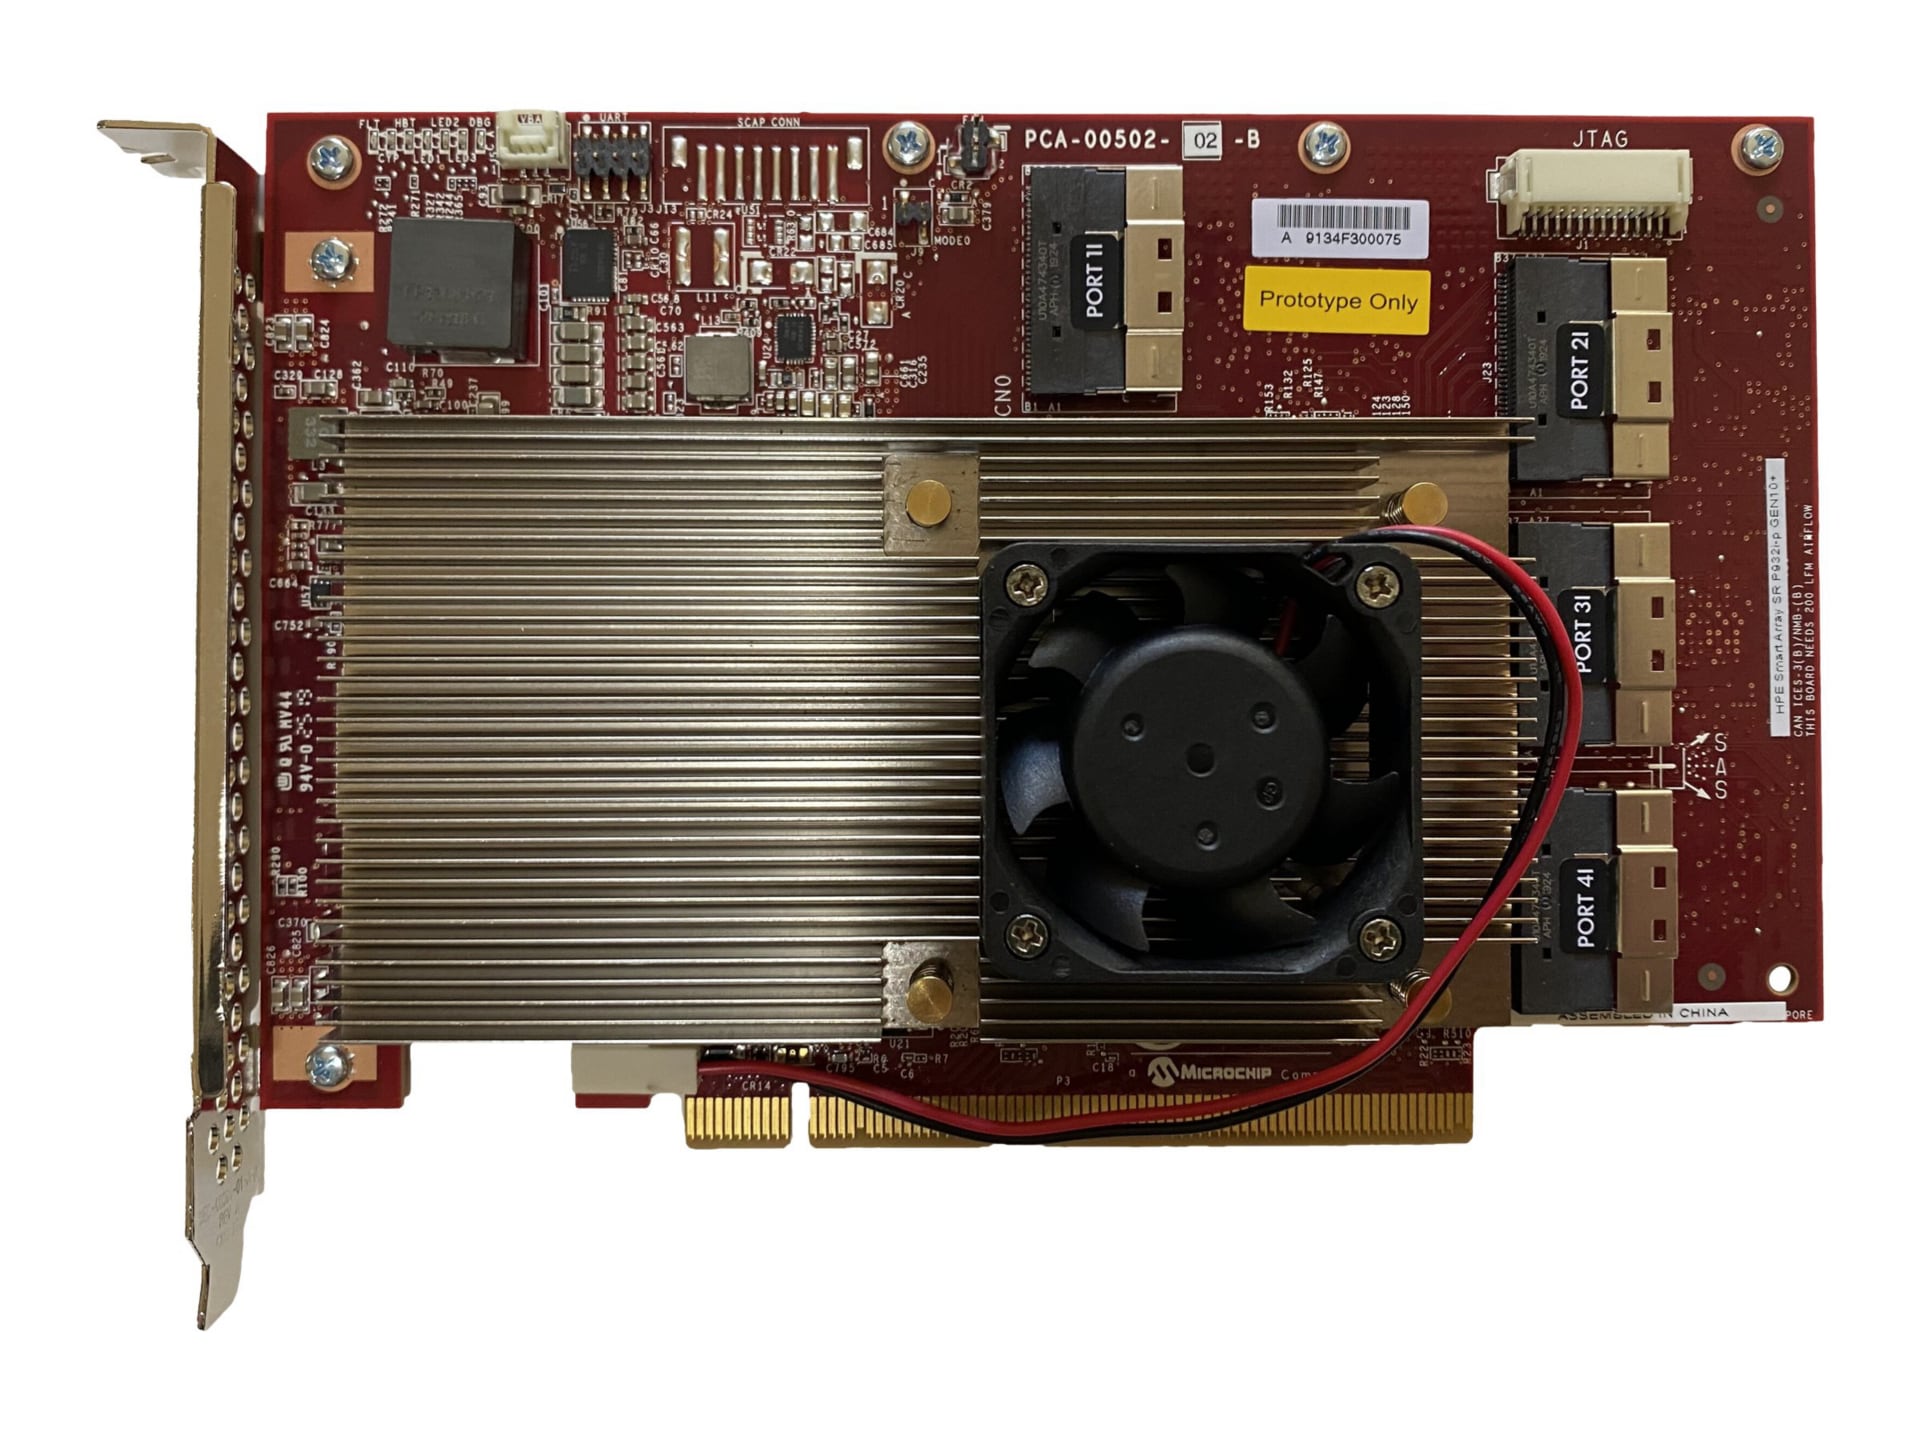 Broadcom MegaRAID MR416i-p - storage controller (RAID) - SATA 6Gb/s / SAS 1